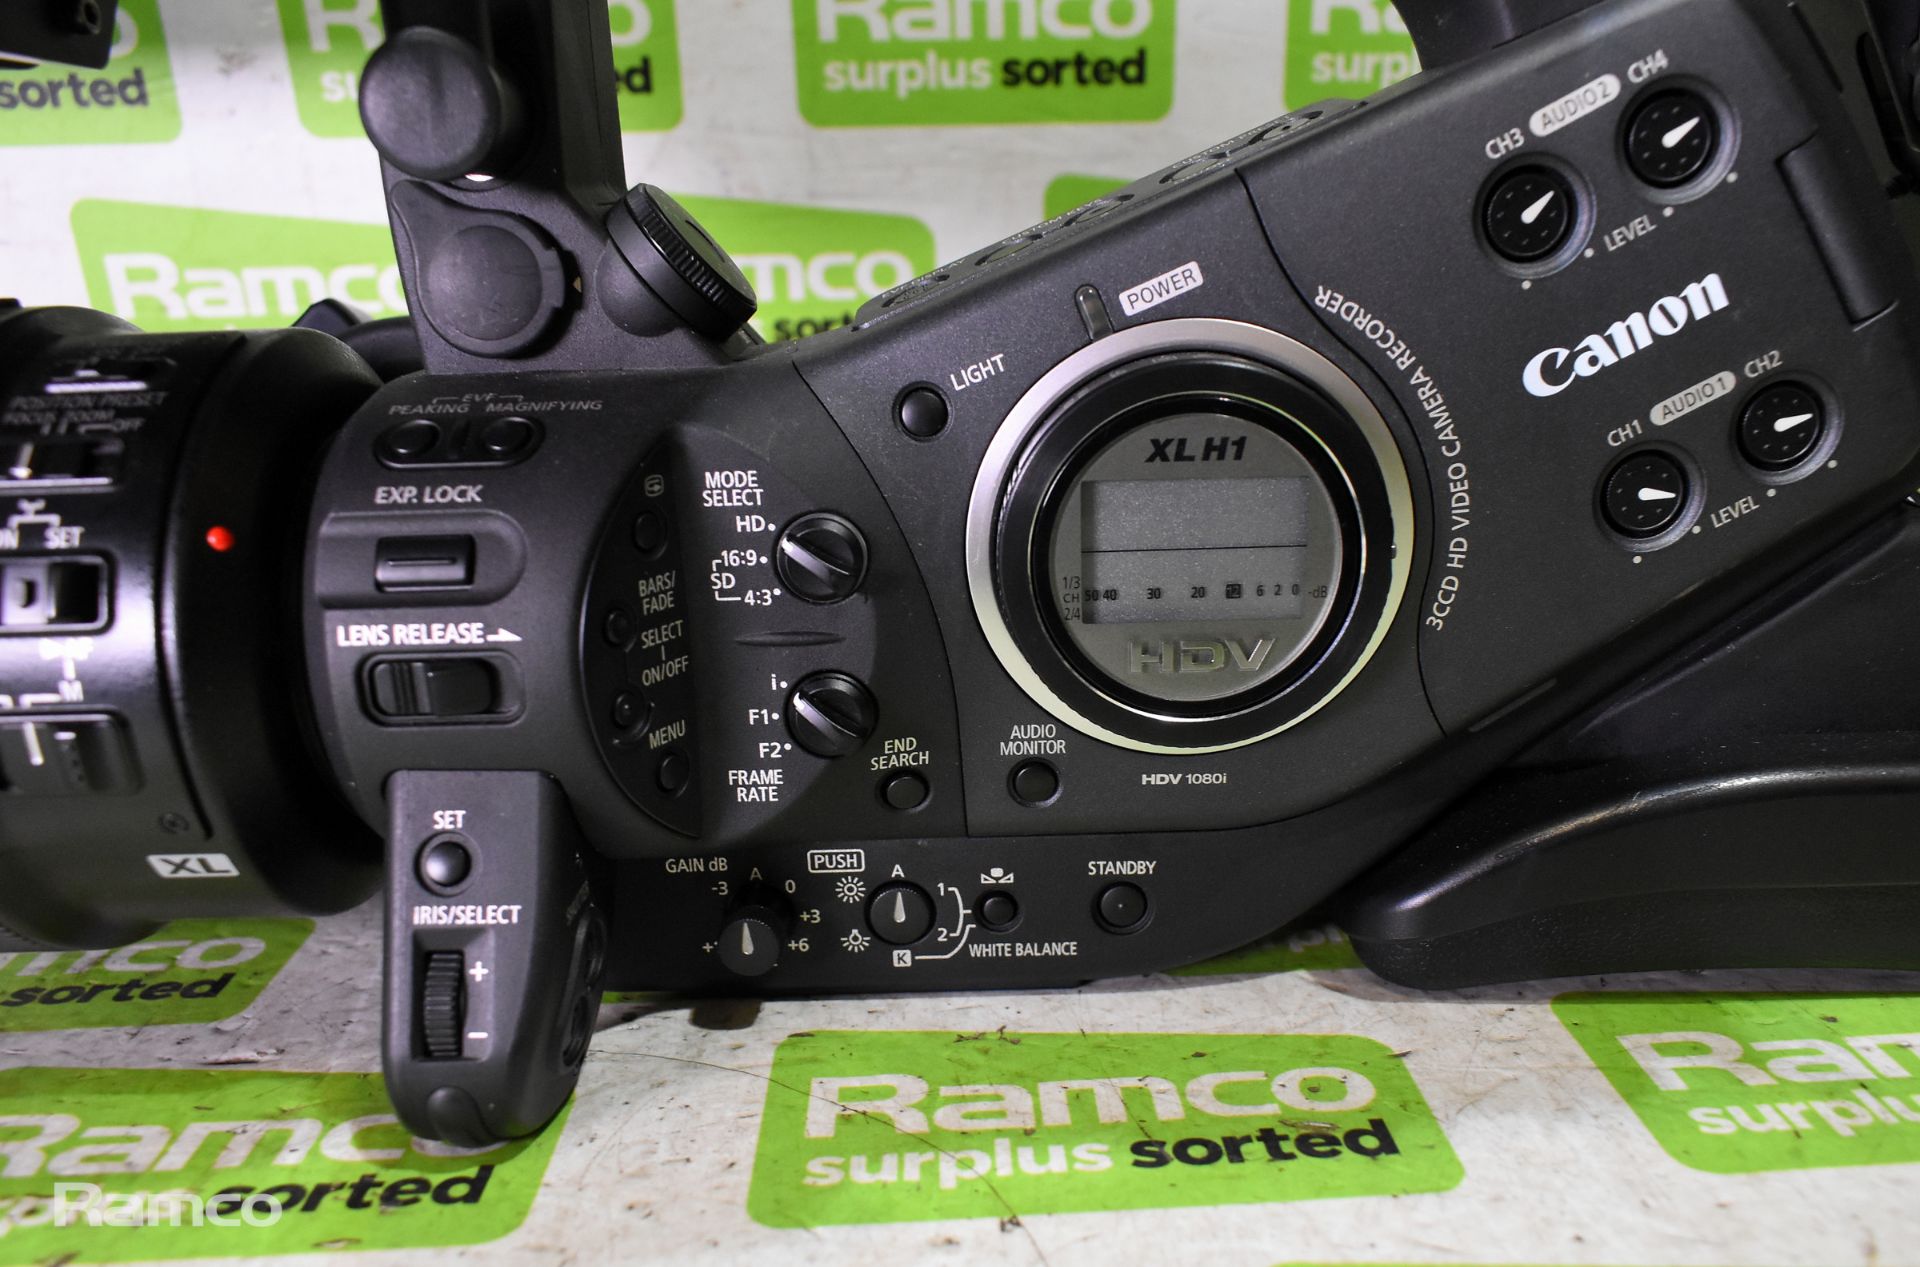 Canon XLH1 HDV 3CCD HD video camera recorder - Image 3 of 18